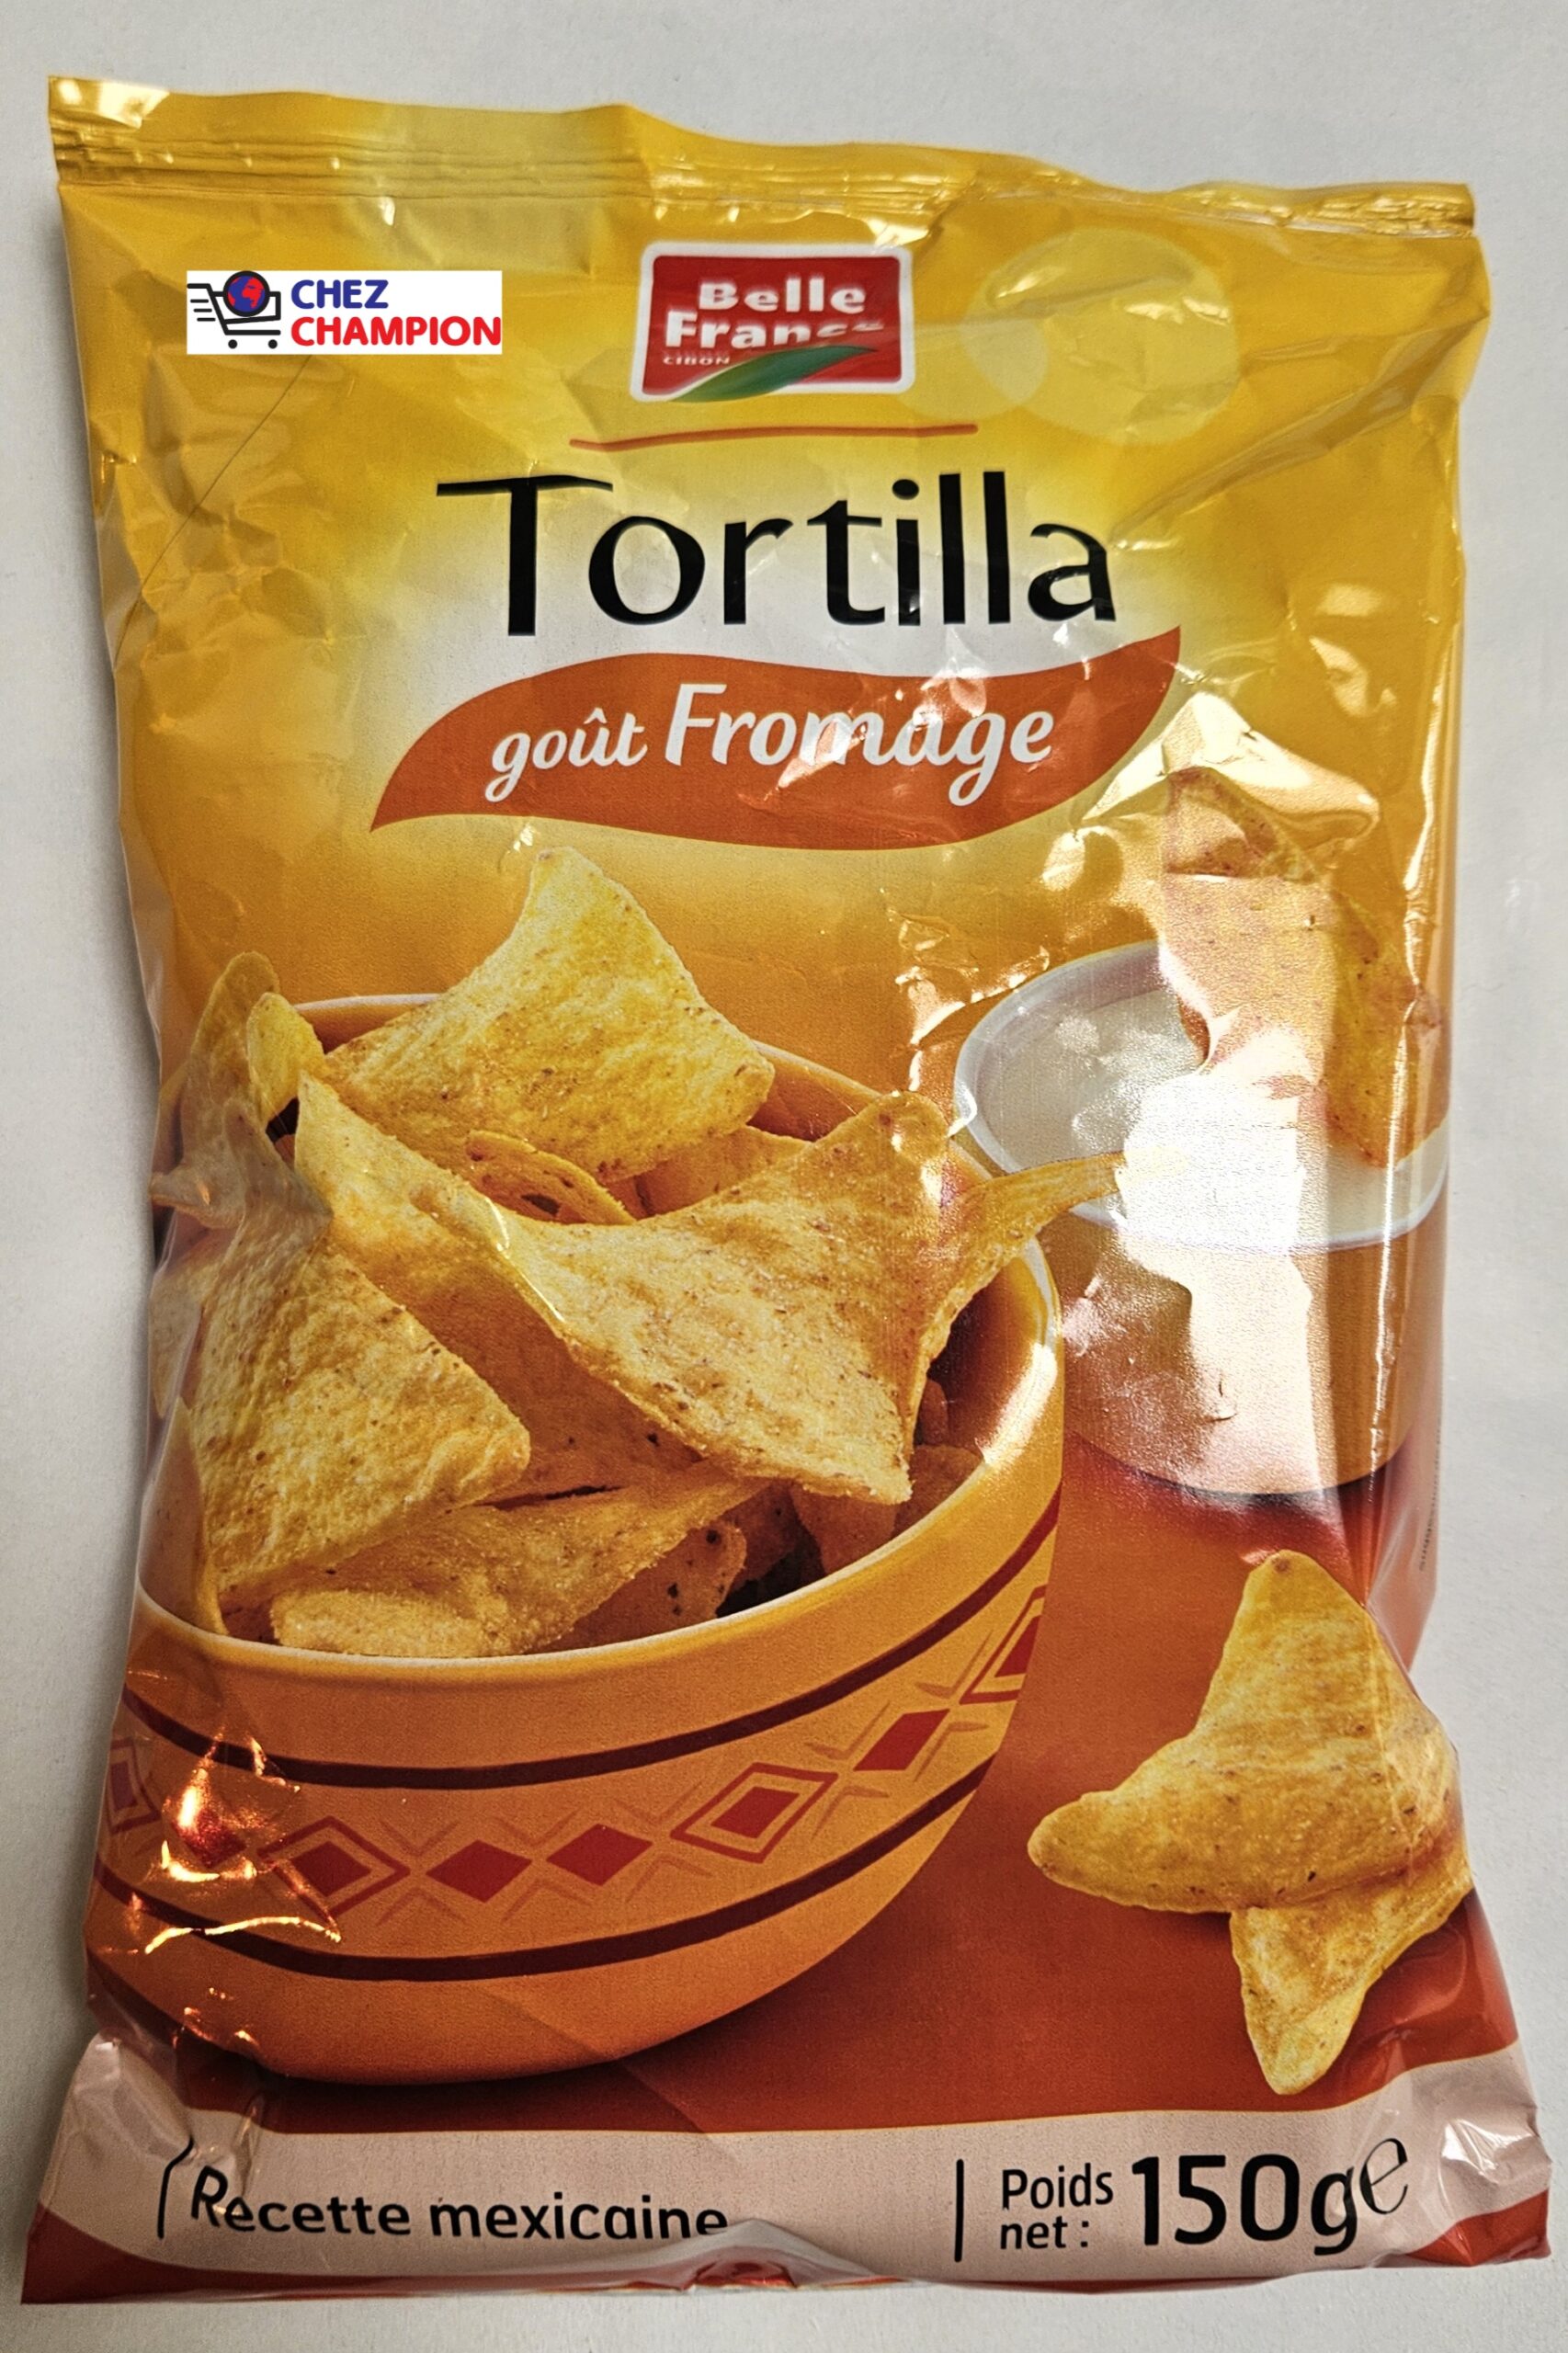 Belle france tortilla chips goût fromage – 150g